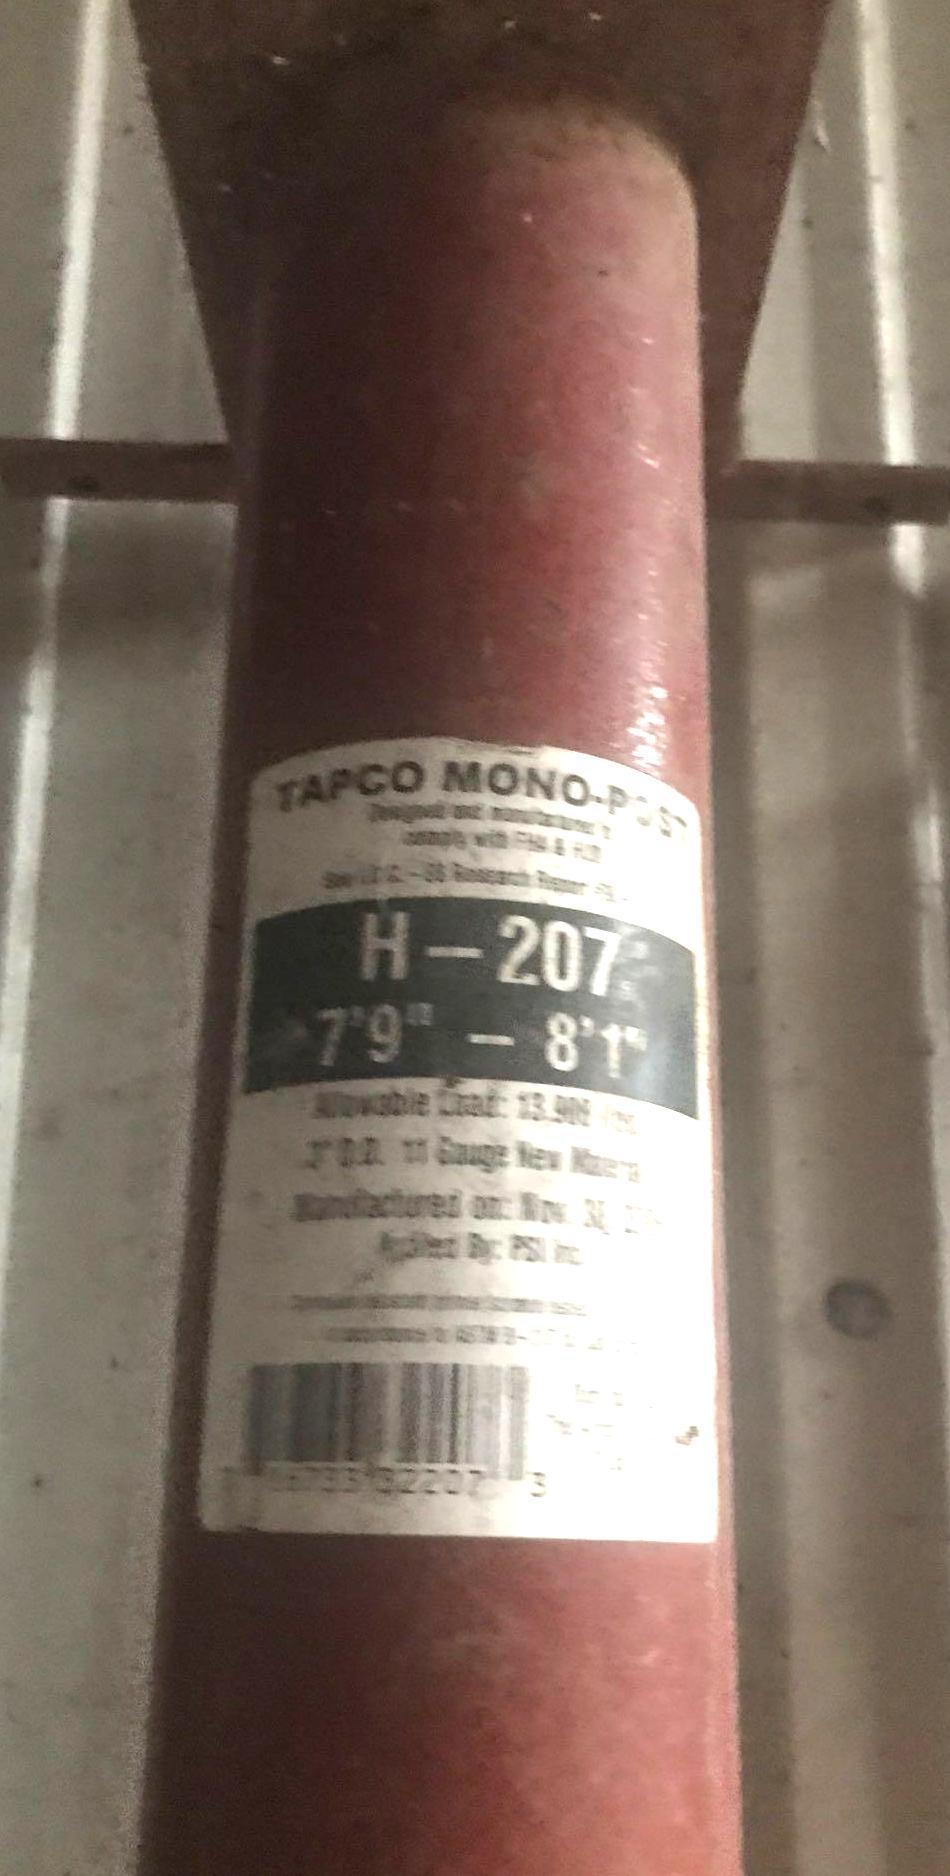 TAPCO mono Post load barring H-207 7'9 -8'1